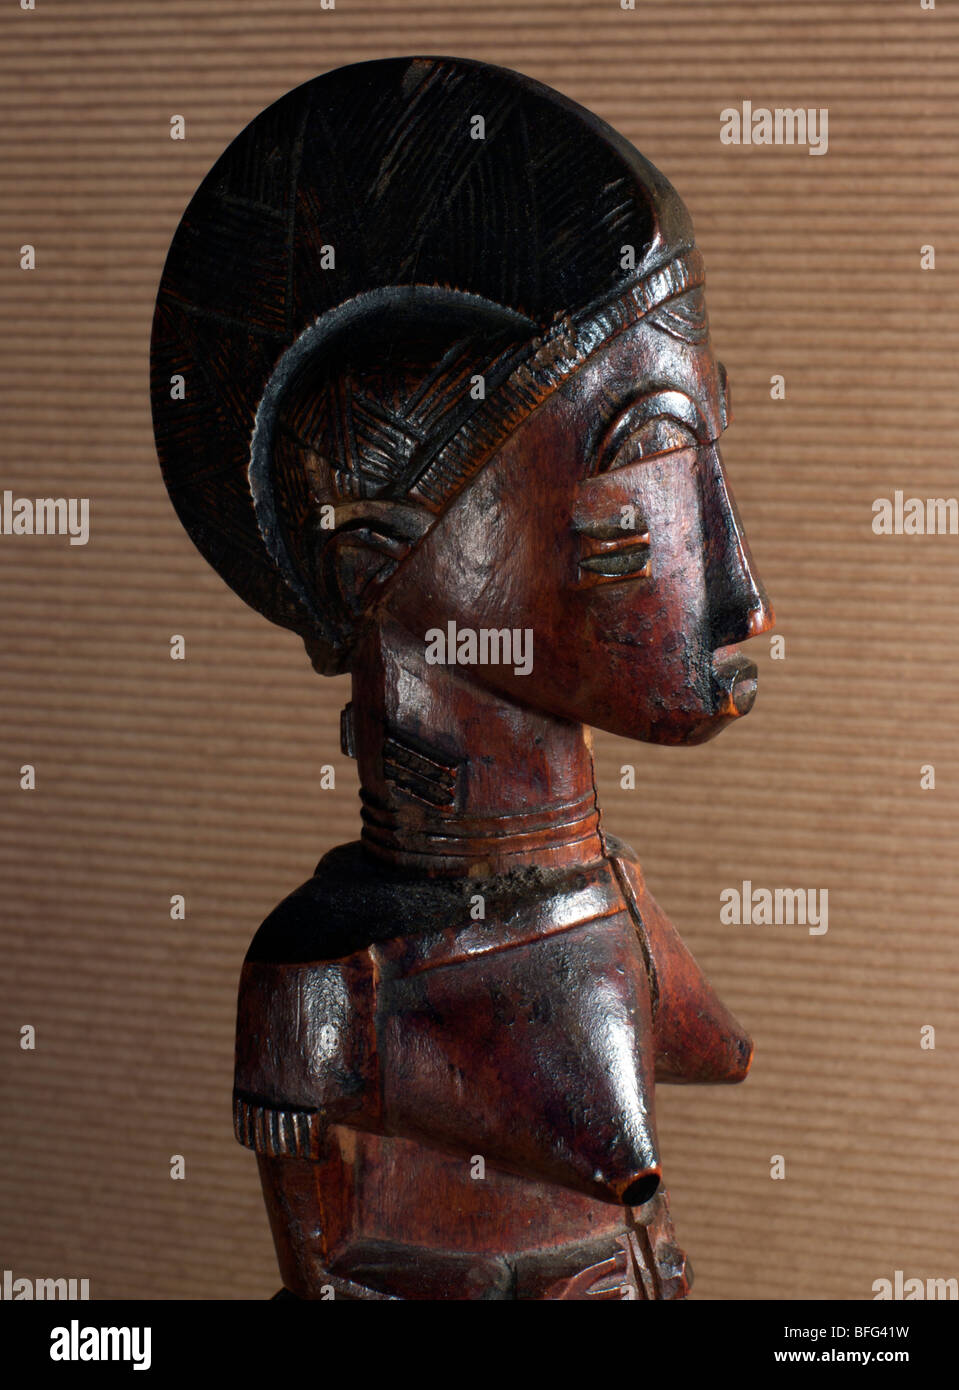 Baule (Ivory Coast) statuette Stock Photo